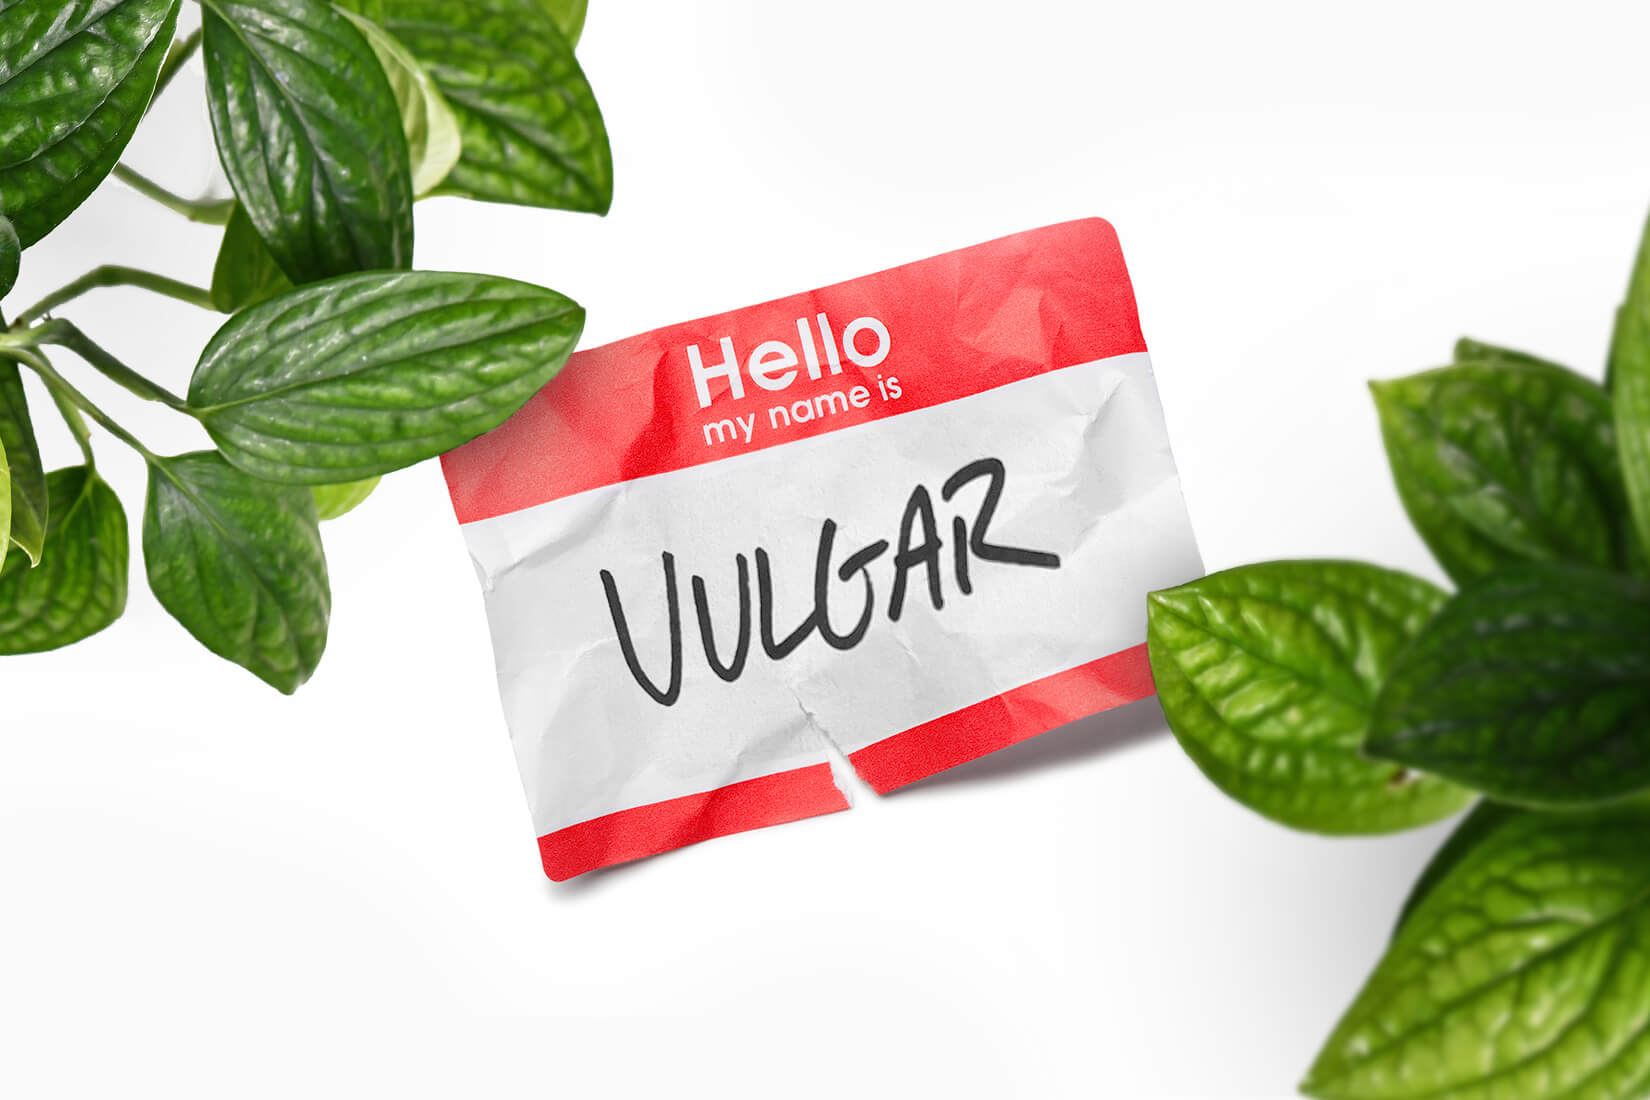 Why Our Digital Marketing Agency is Called Vulgar